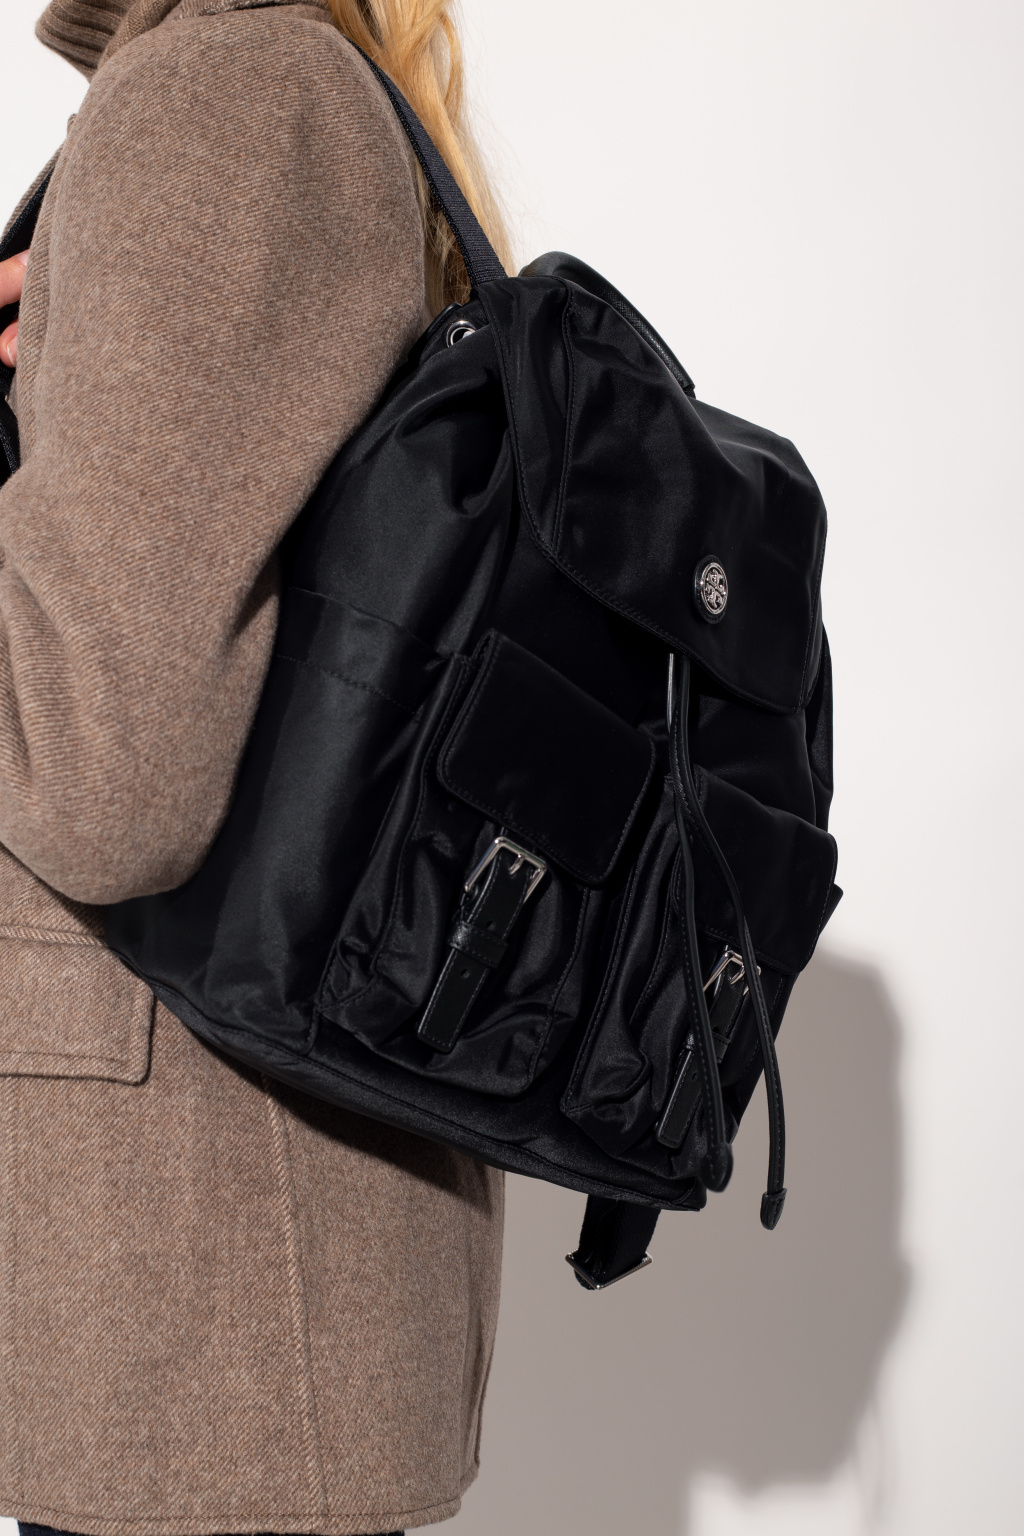 Tory Burch ‘Virginia’ metallic backpack